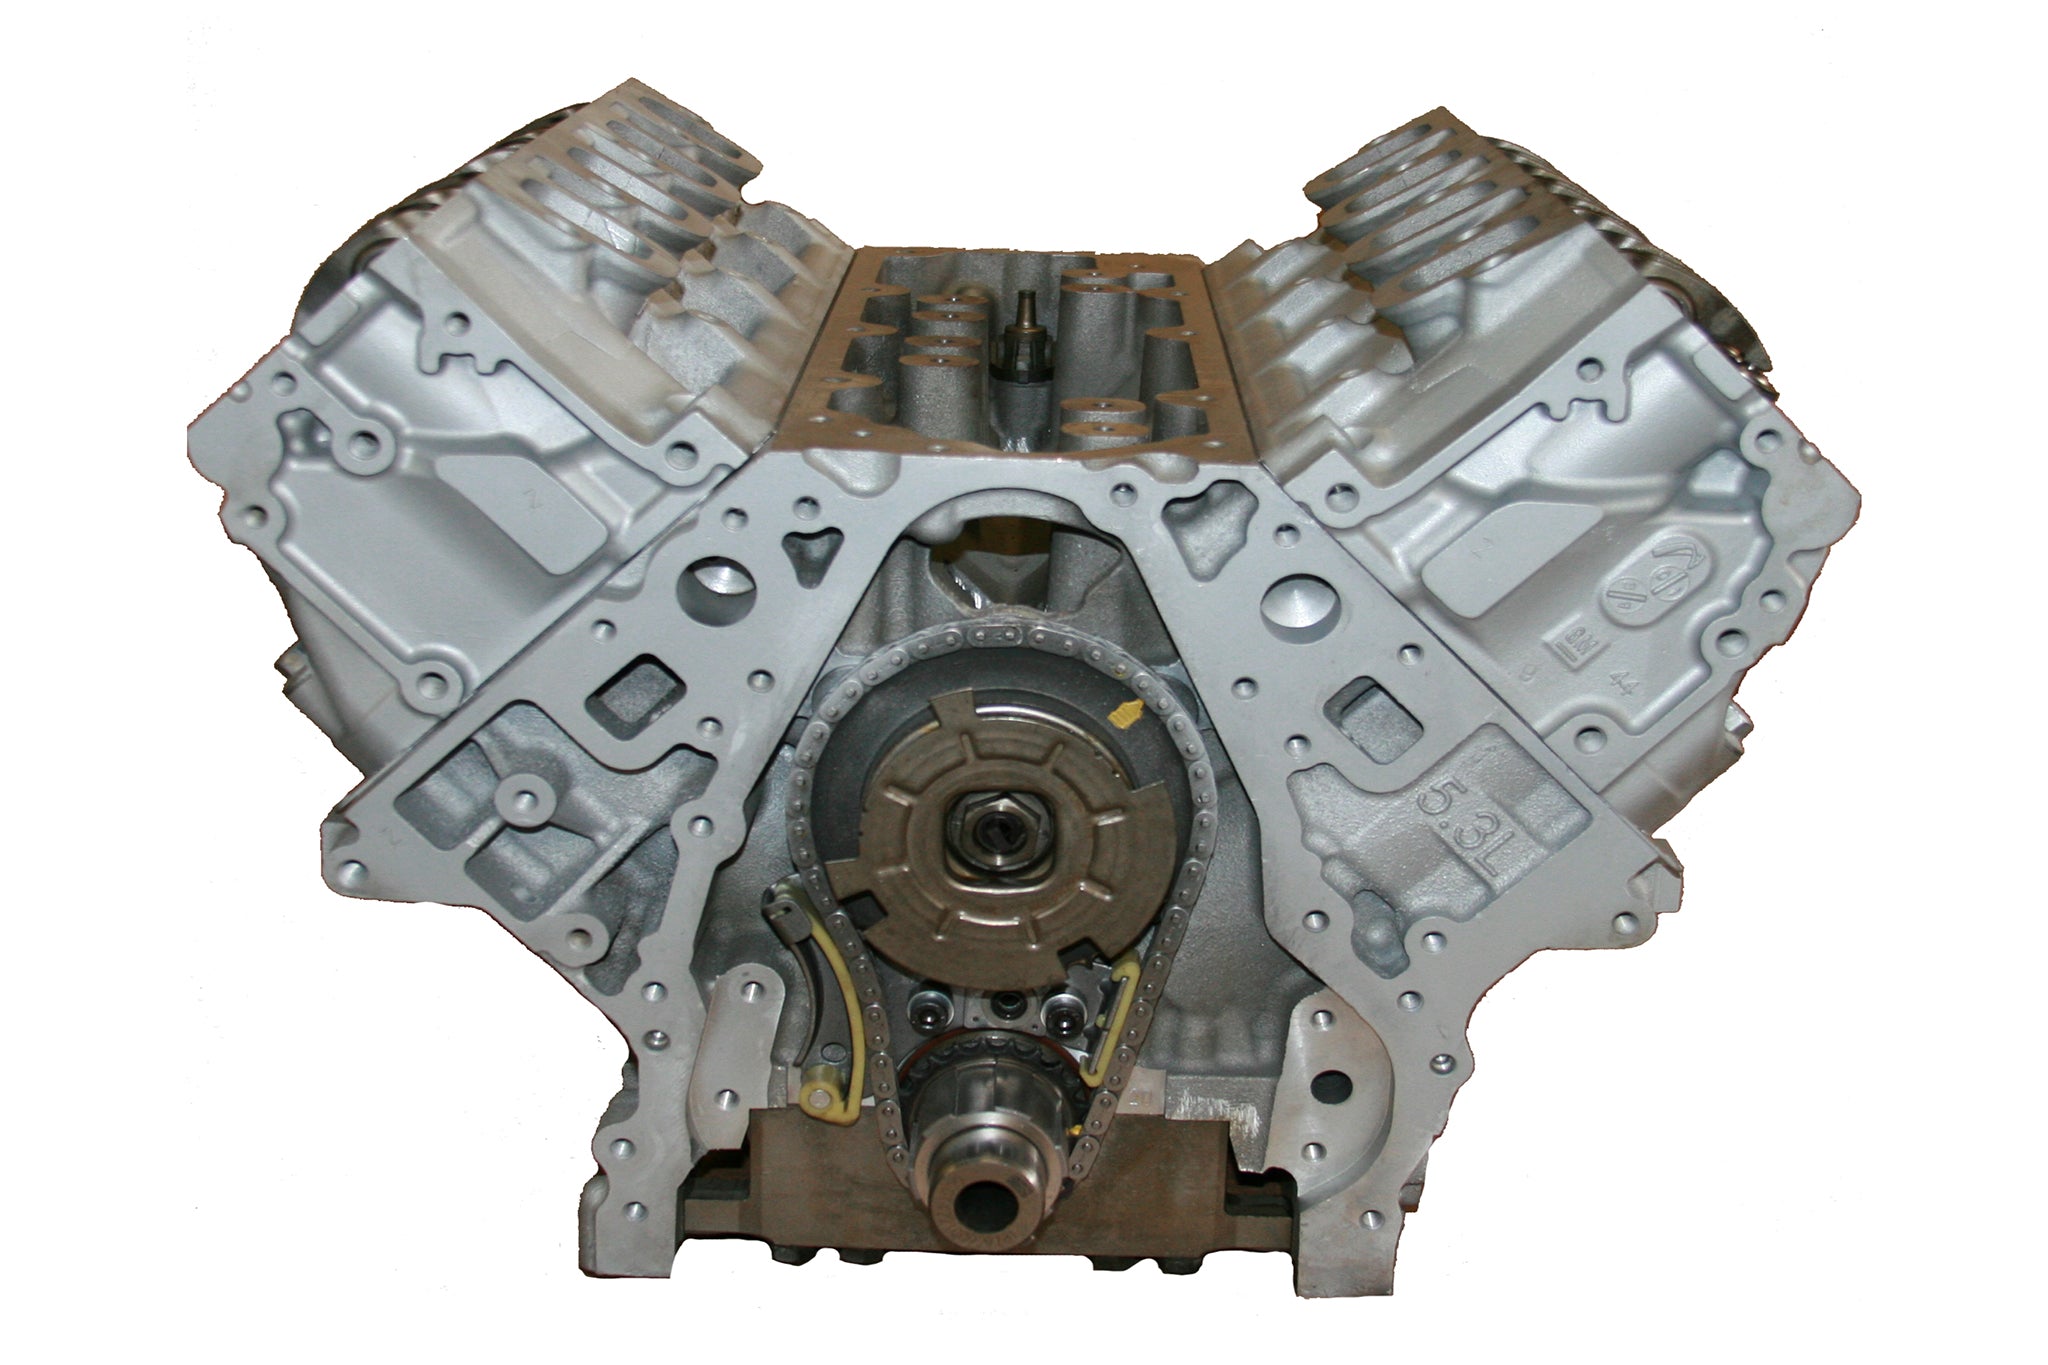 2014-18 Chevy 5.3L L83 Vin C Flex Aluminum Block VVT GDI Rebuilt Engine